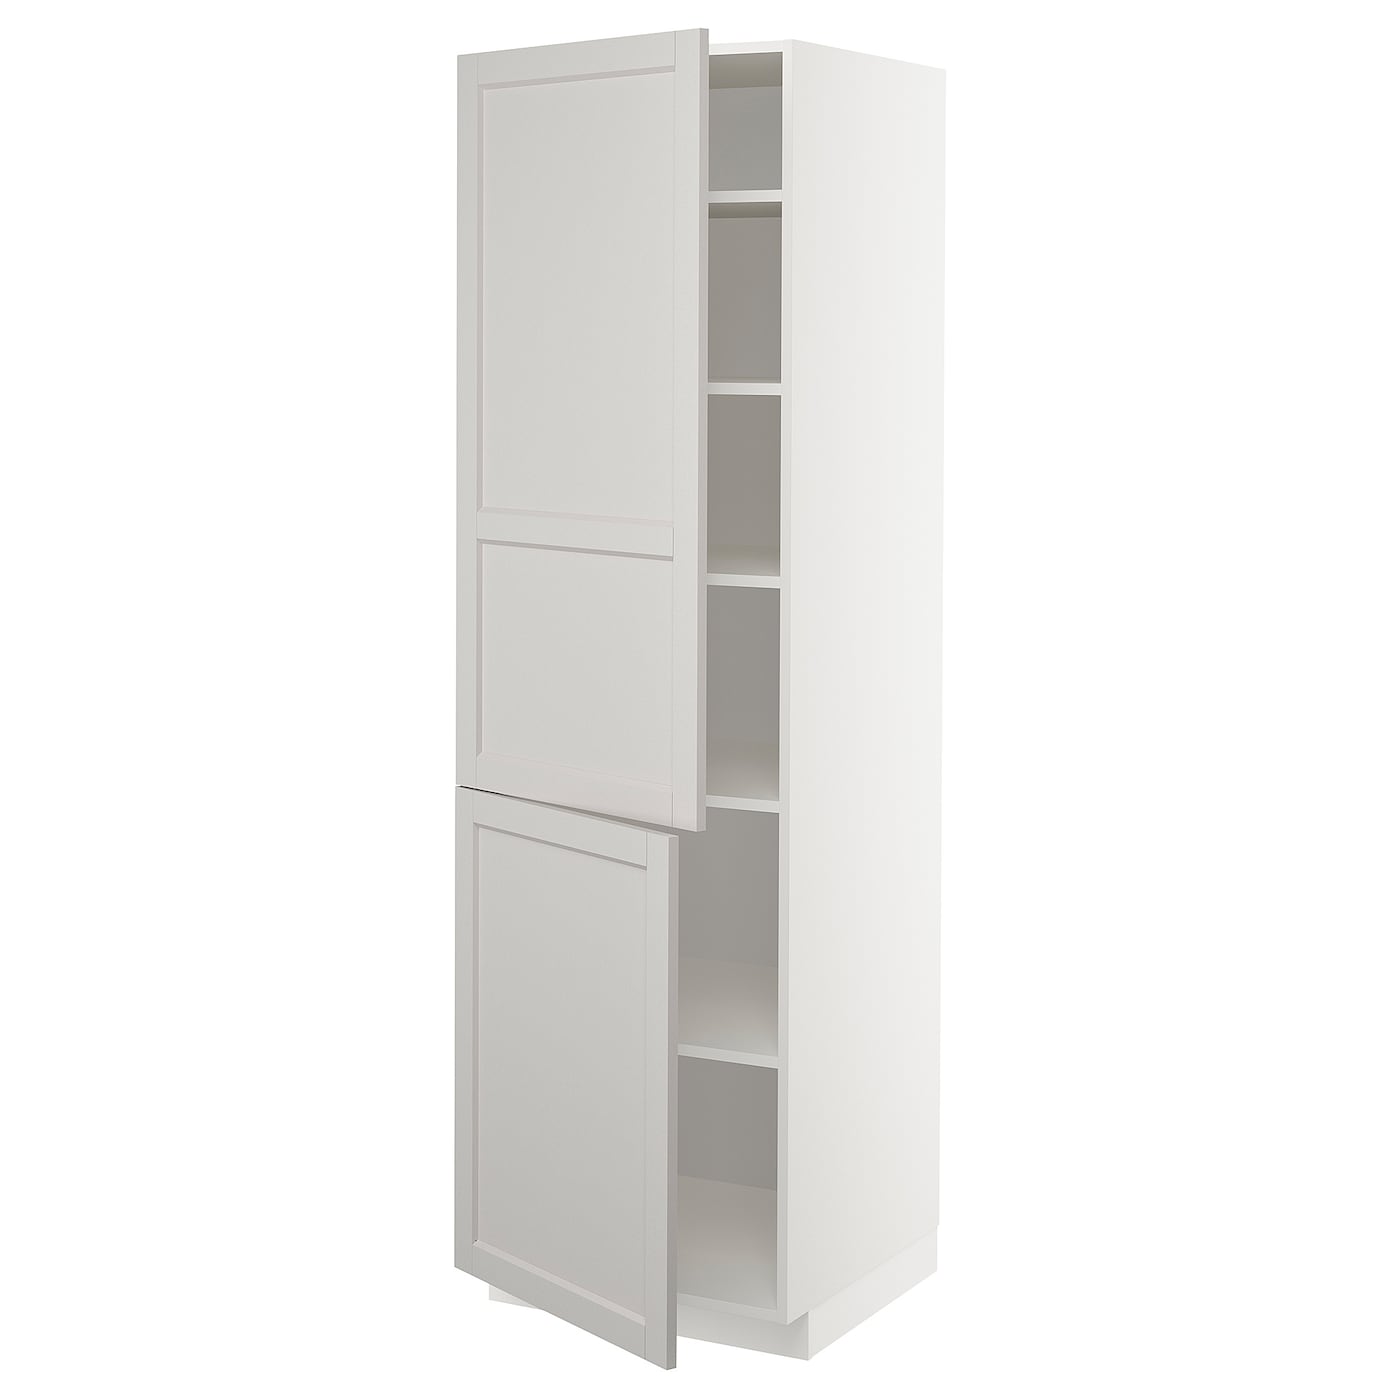 Высокий шкаф - IKEA METOD/МЕТОД ИКЕА, 200х60х60 см, белый/серый